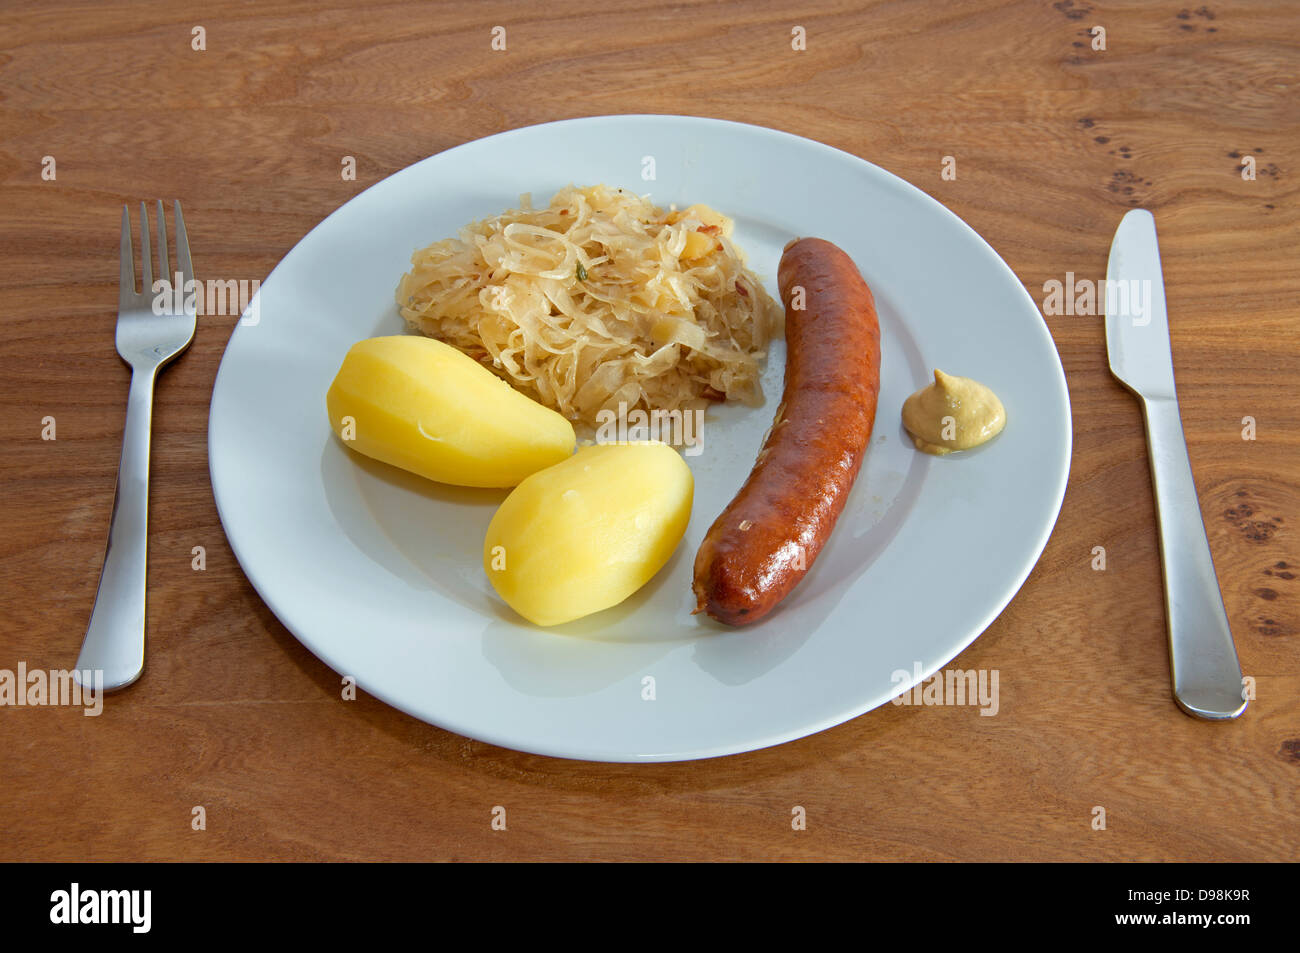 Sauerkraut, pork sausage, boiled potatoes. Stock Photo